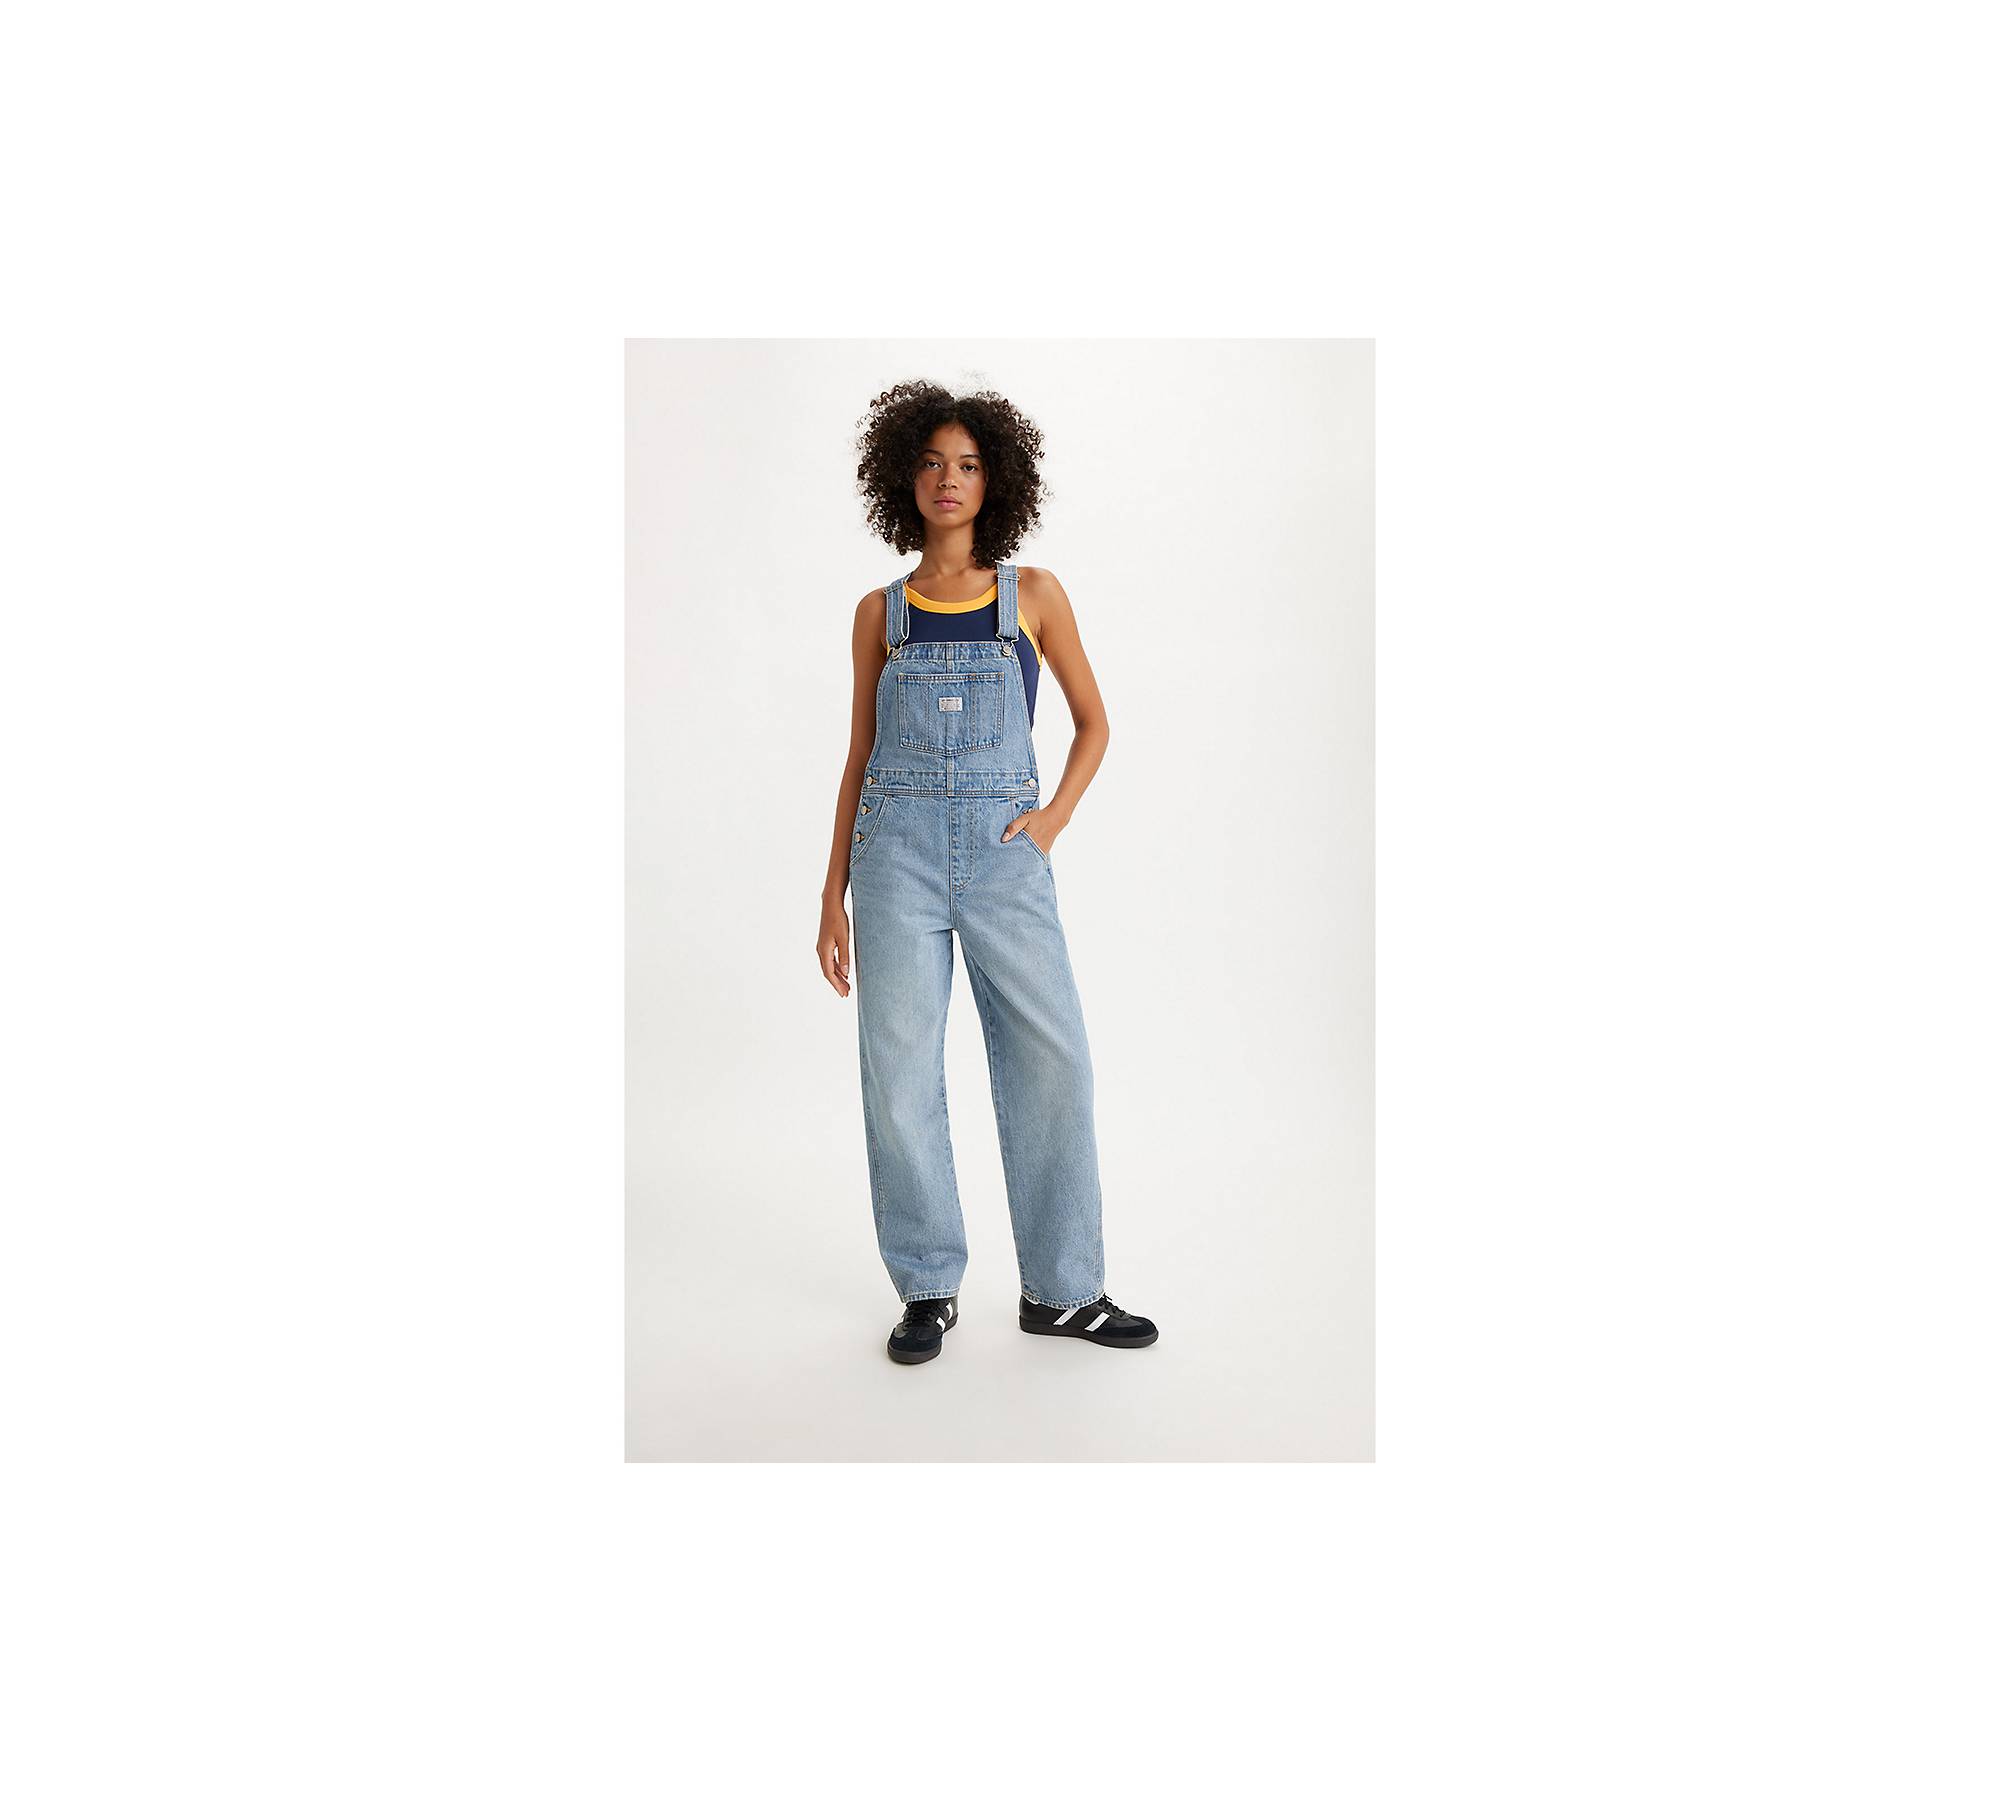 Women's Jeans Suit Overall Jumpsuit Skinny Fit Denim One Piece Jumper  Streetwear